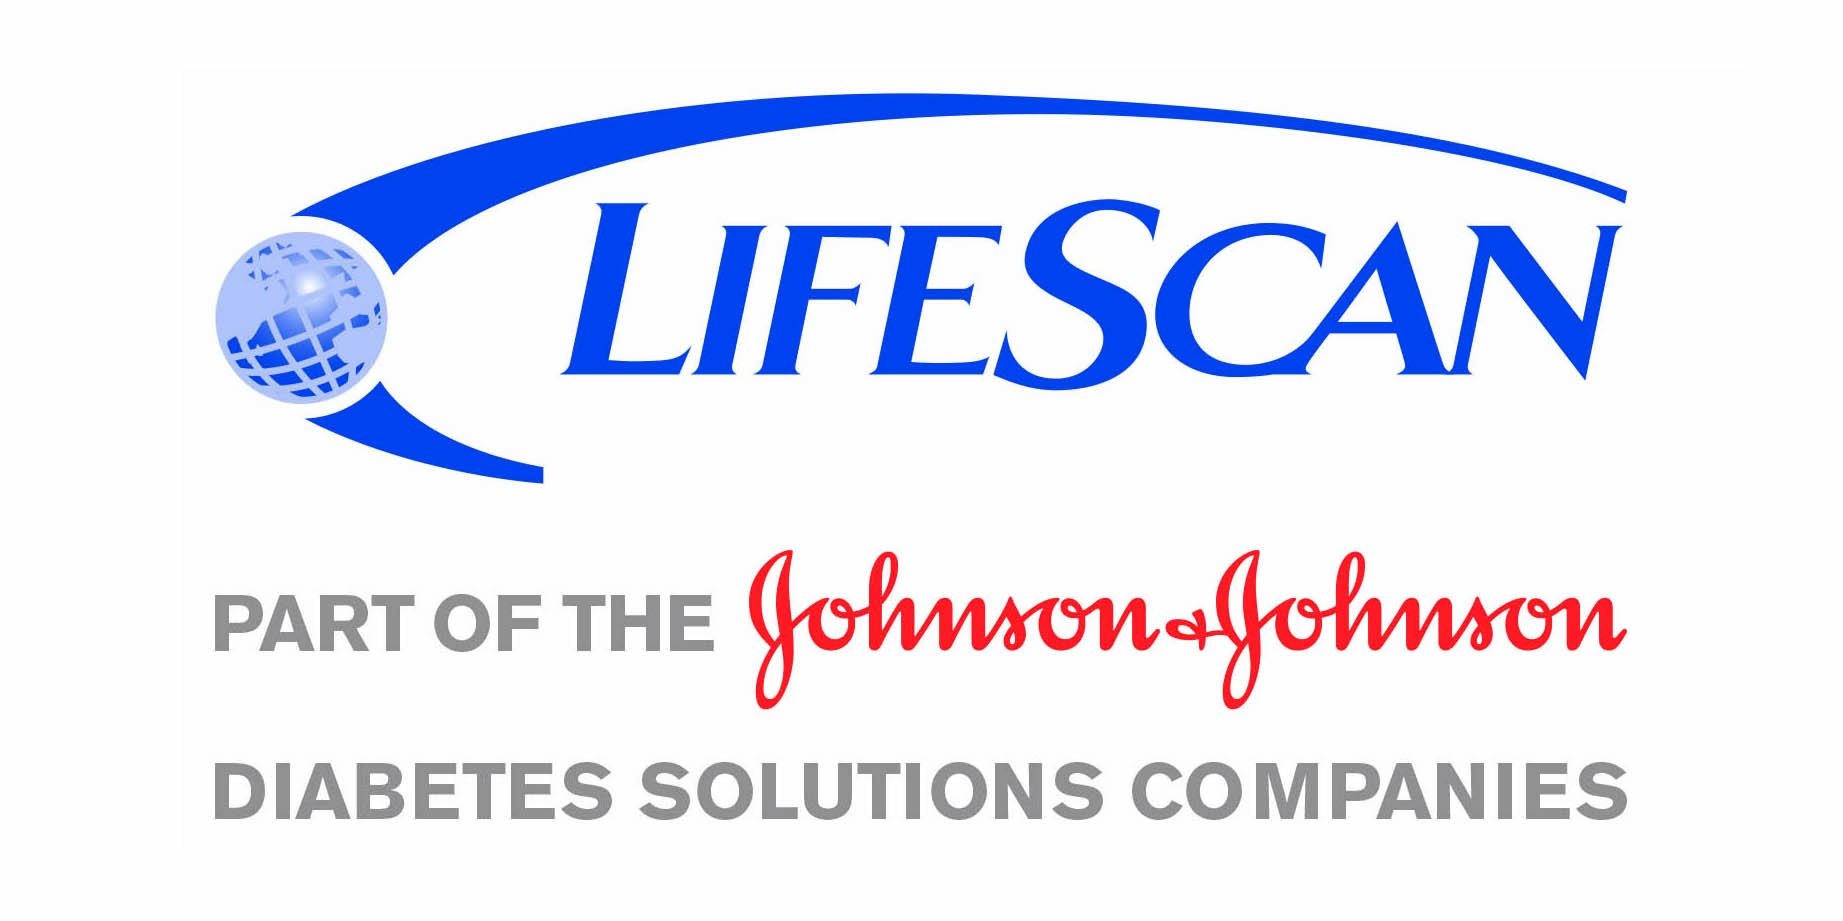 logo Johnson & Johnson